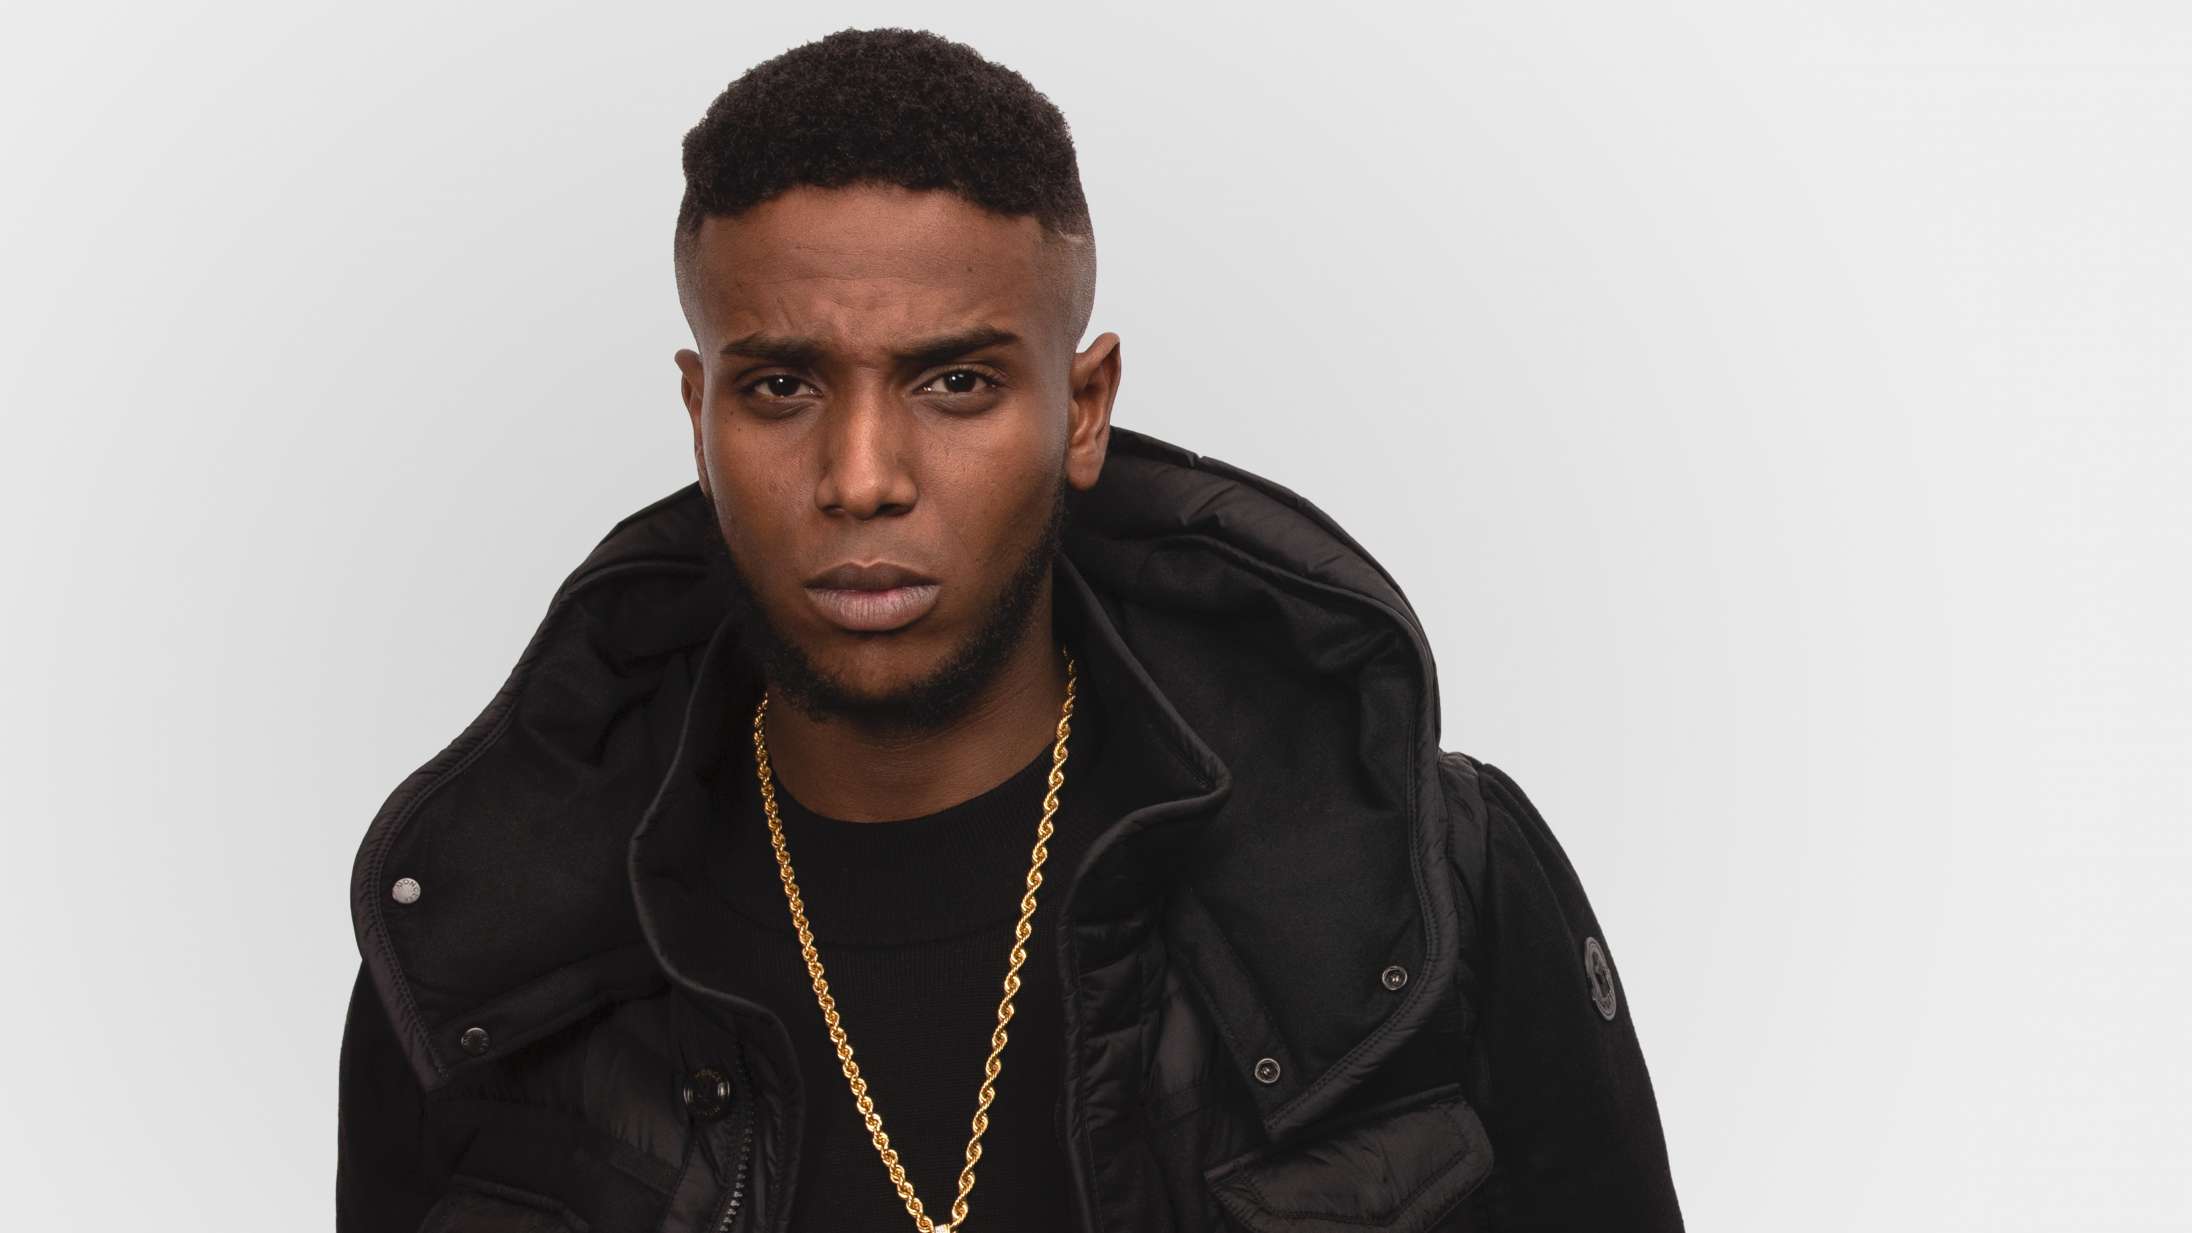 Jamaikas nye single er en øm sang til rapperens ufødte barn